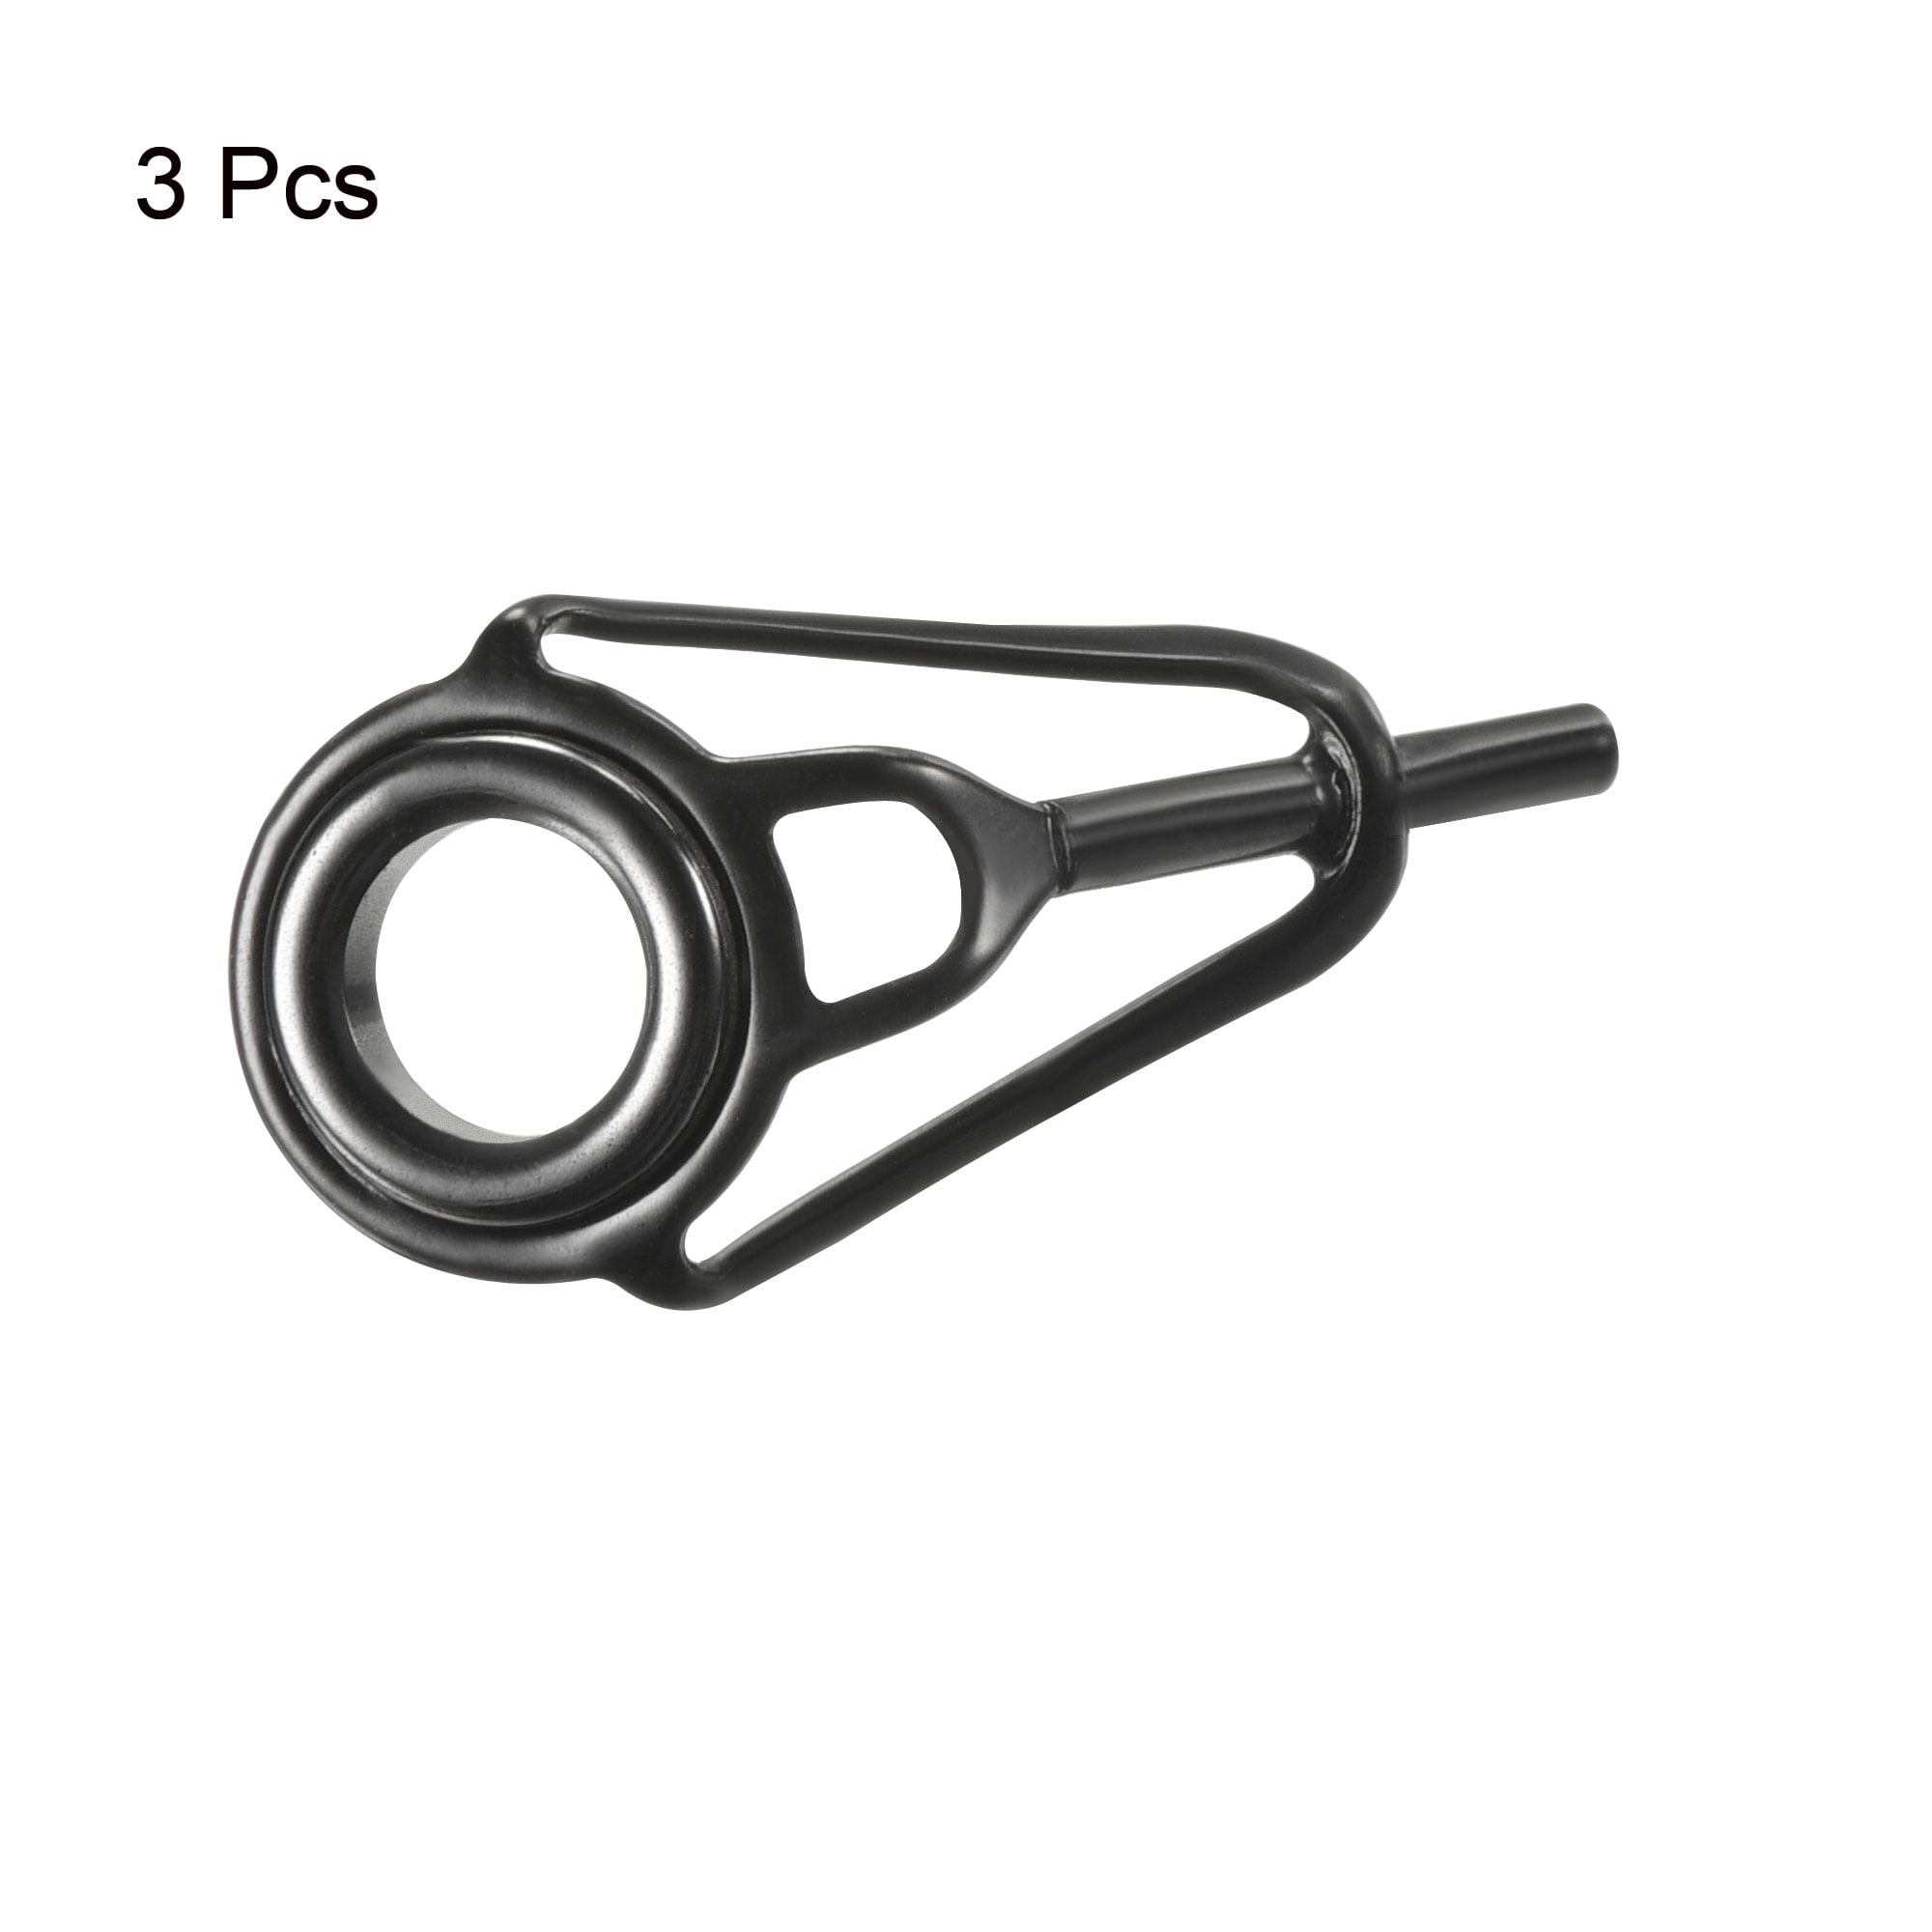 2.4mm Tube Dia Stainless Steel Fishing Rod Tips Repair Kit Ring Guide, 3  Pack 